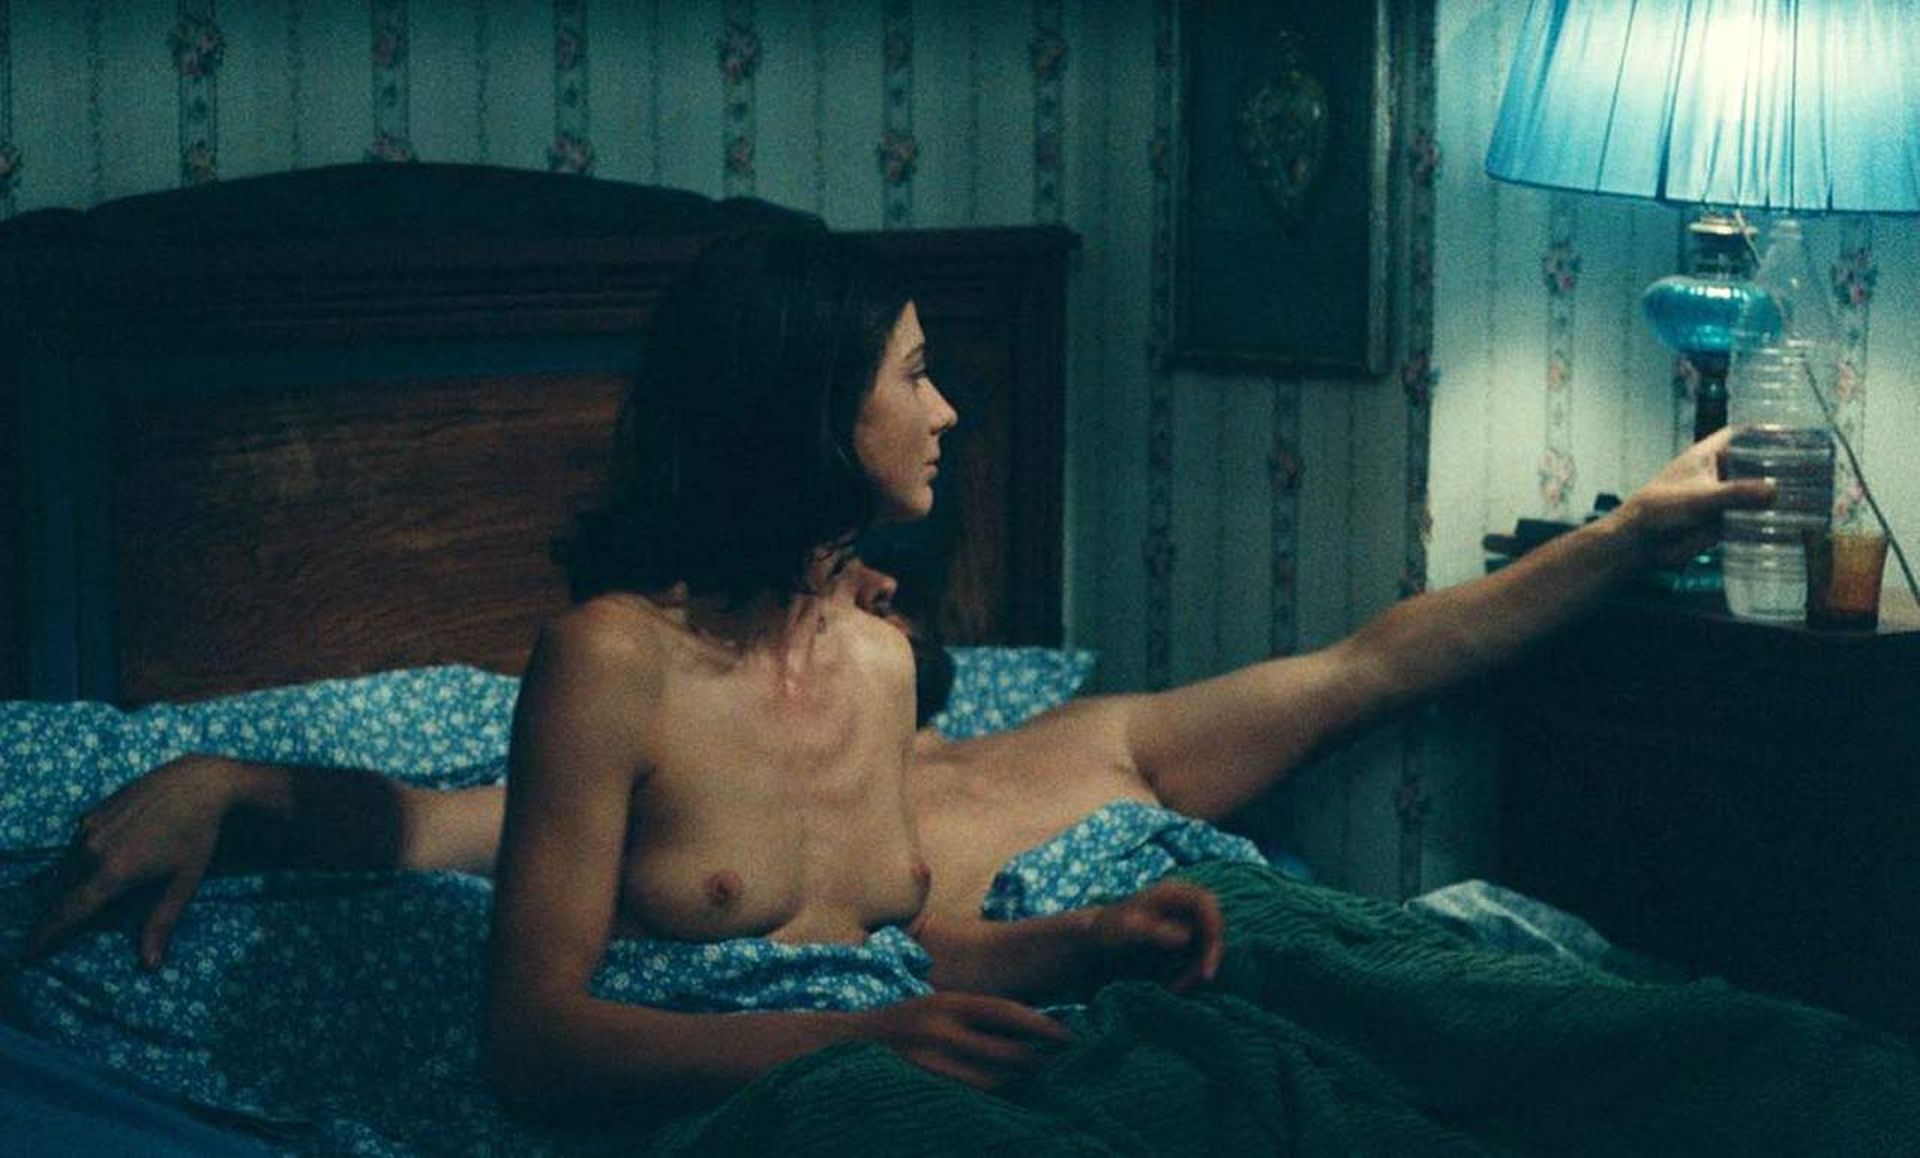 Watch Thérèse Liotard nude scene from "L' une... 